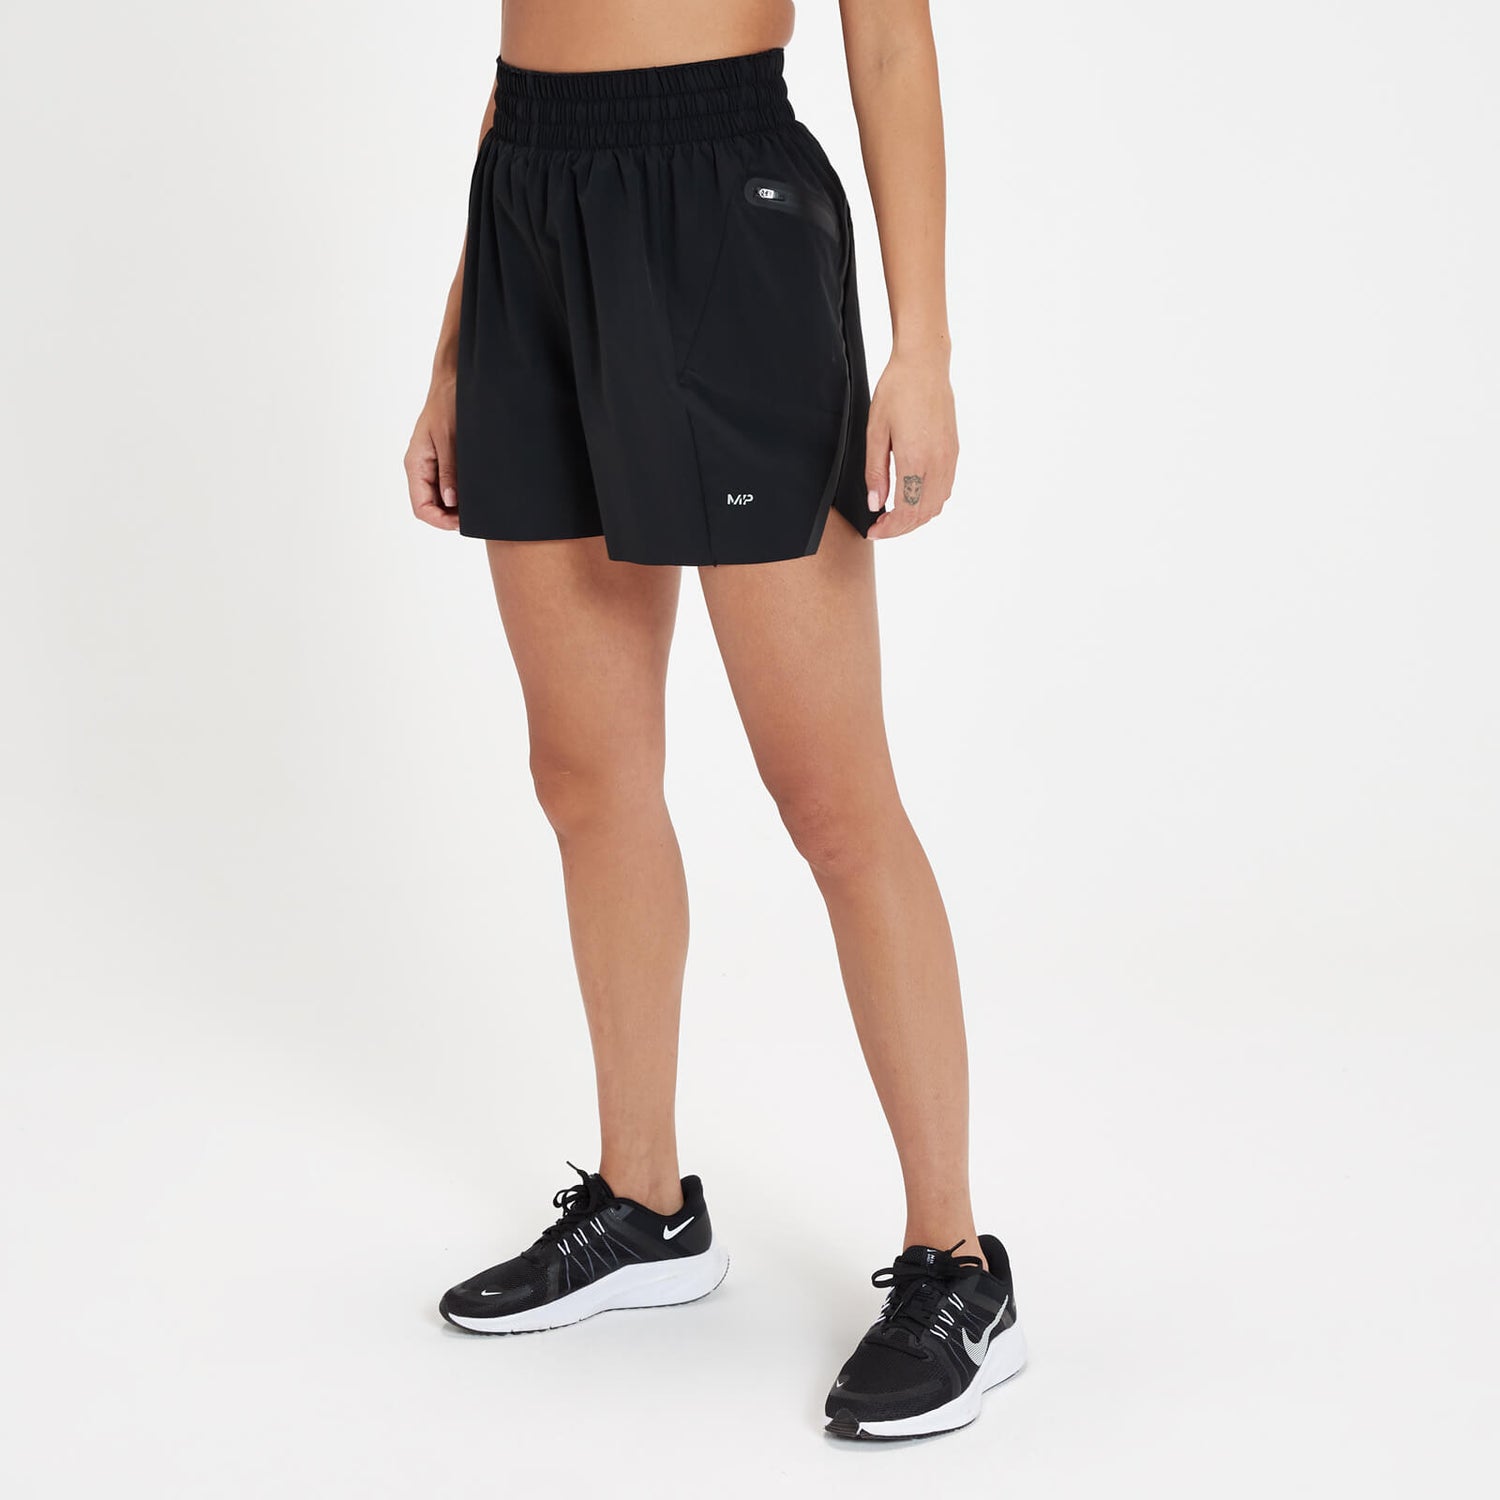 Velocity Ultra速度升级系列女士反光跑步短裤 - 黑色